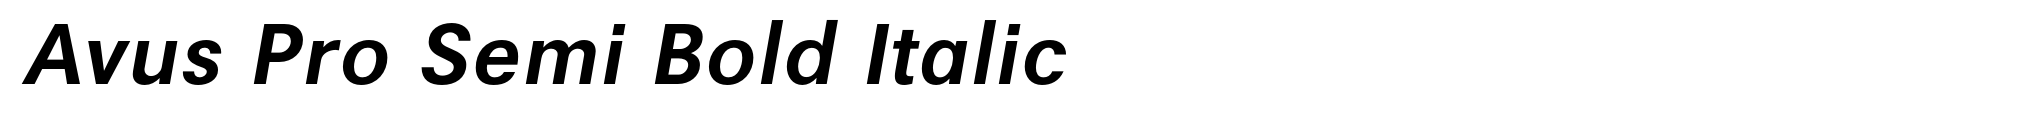 Avus Pro Semi Bold Italic image